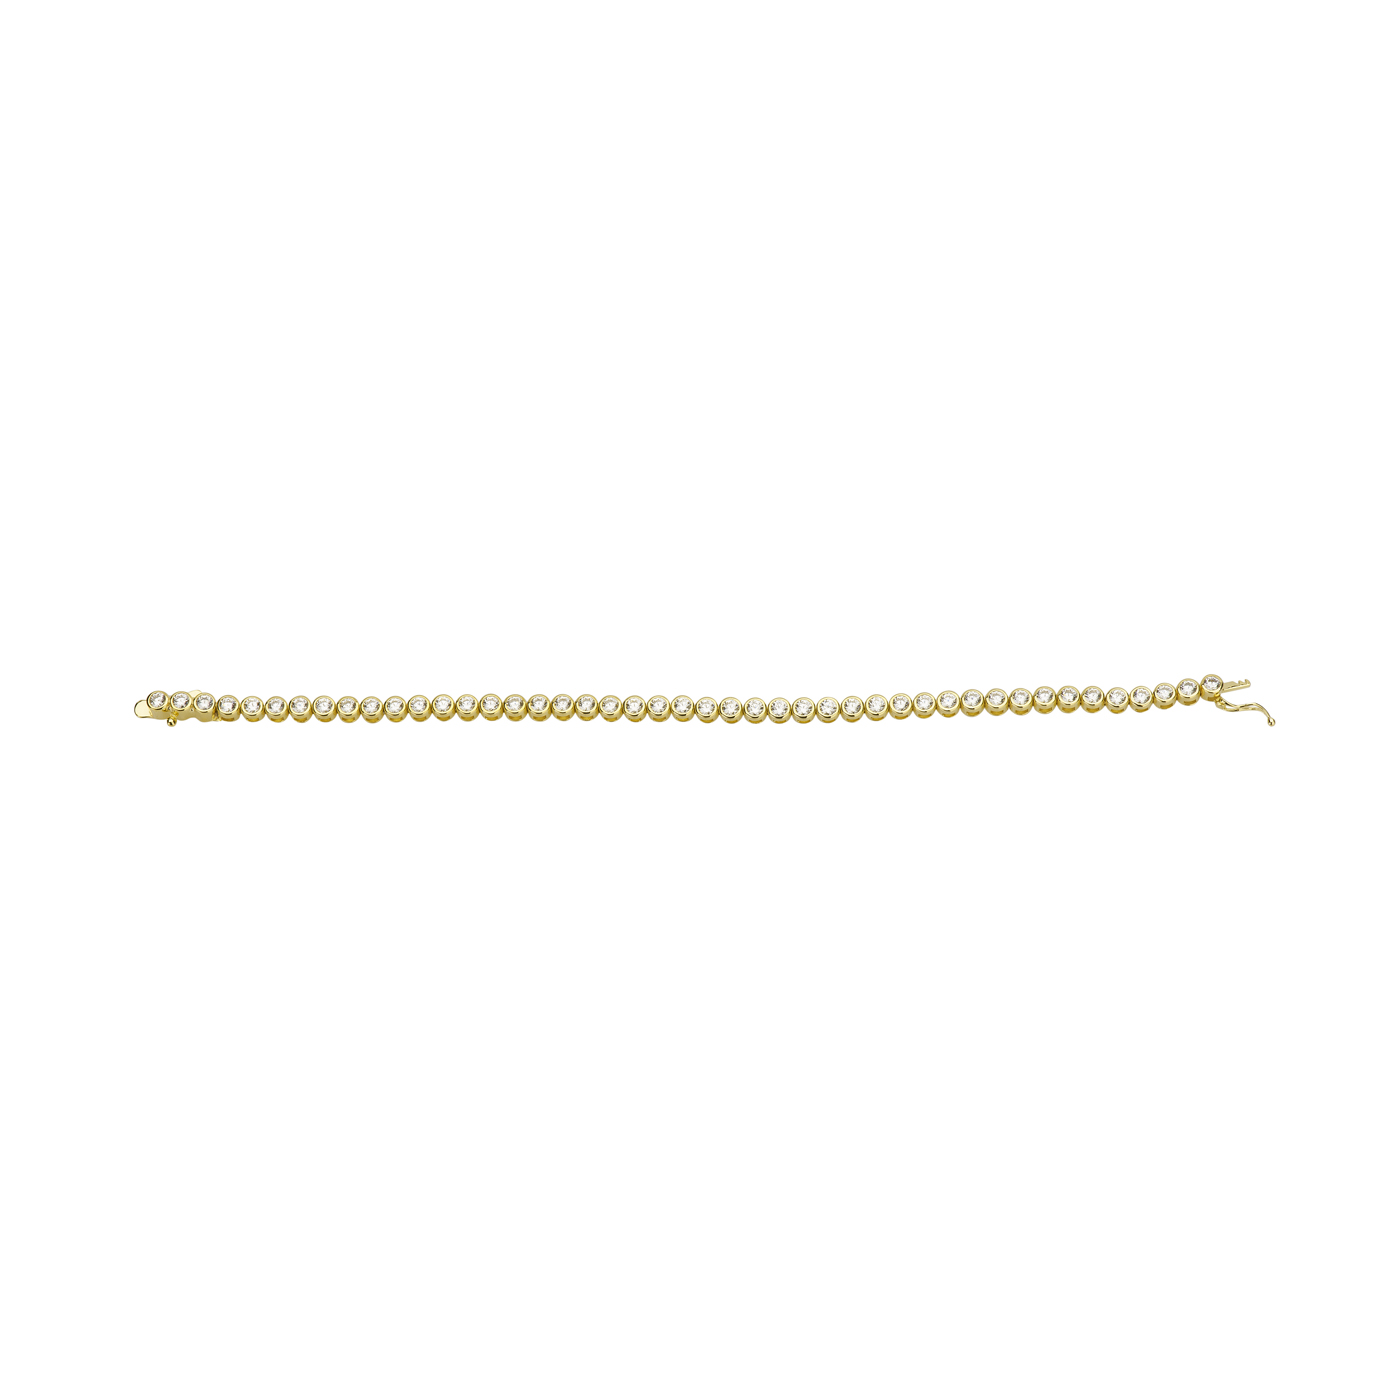 Armband, 925 Ag vergoldet, Länge 19 cm, Zirkonia weiß - 1 Stück